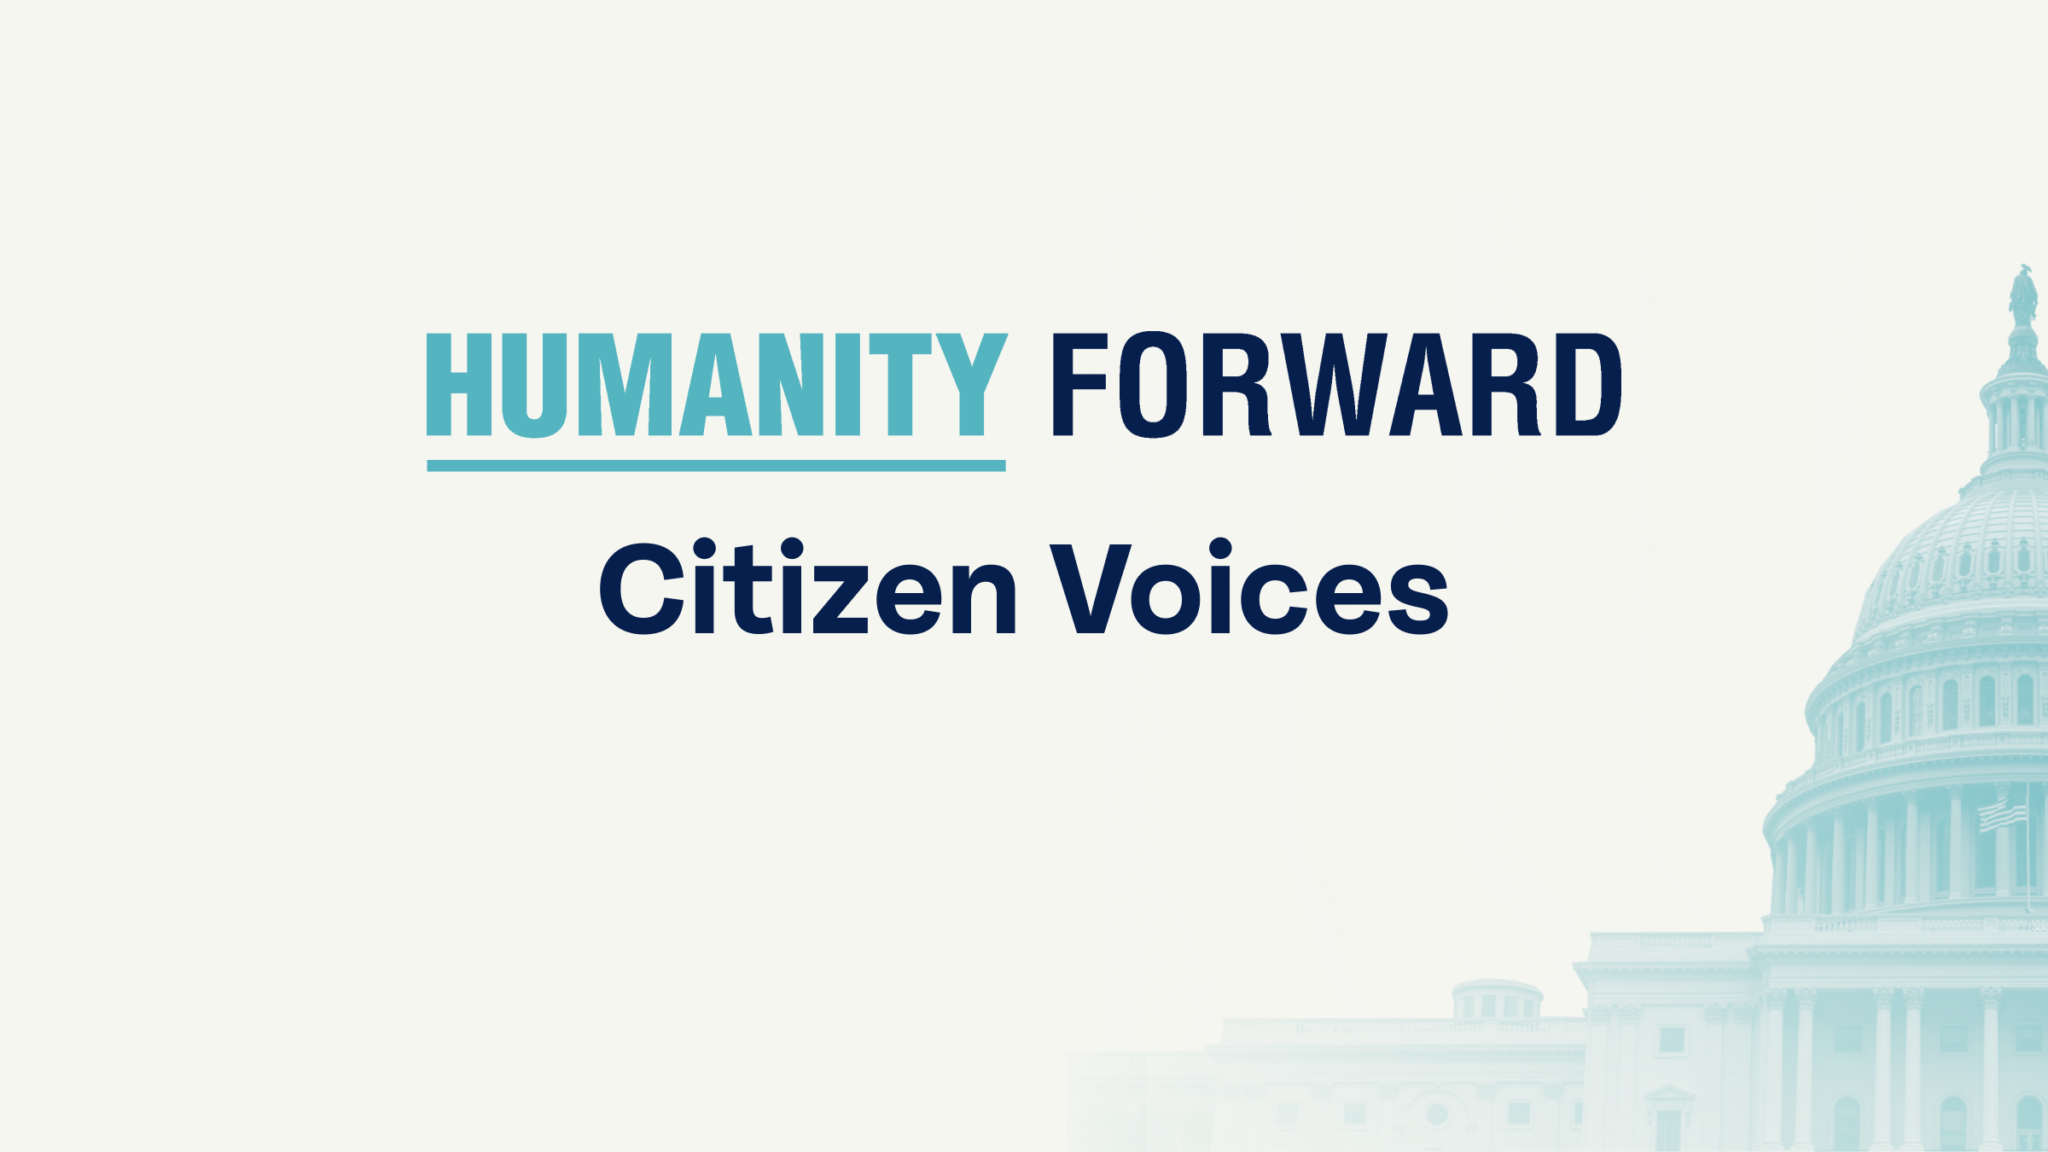 Humanity Forward Citizen Voice